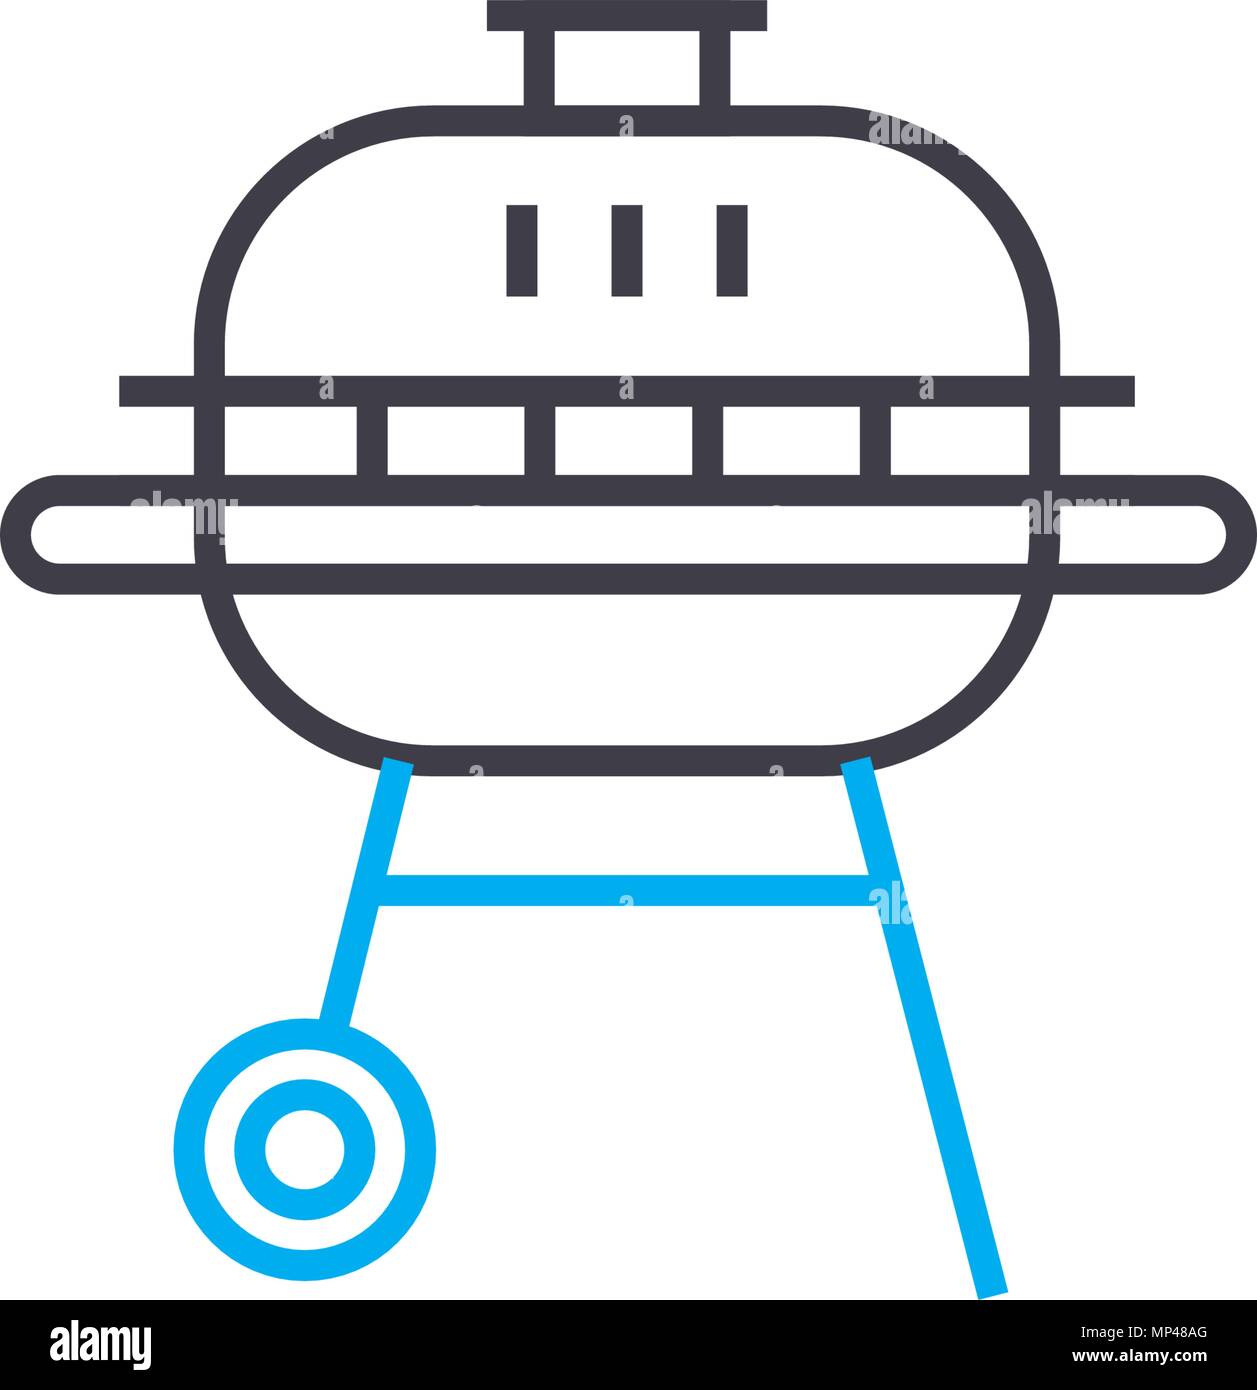 Steak grill linear icon concept. Steak grill line vector sign, symbol, illustration. Stock Vector